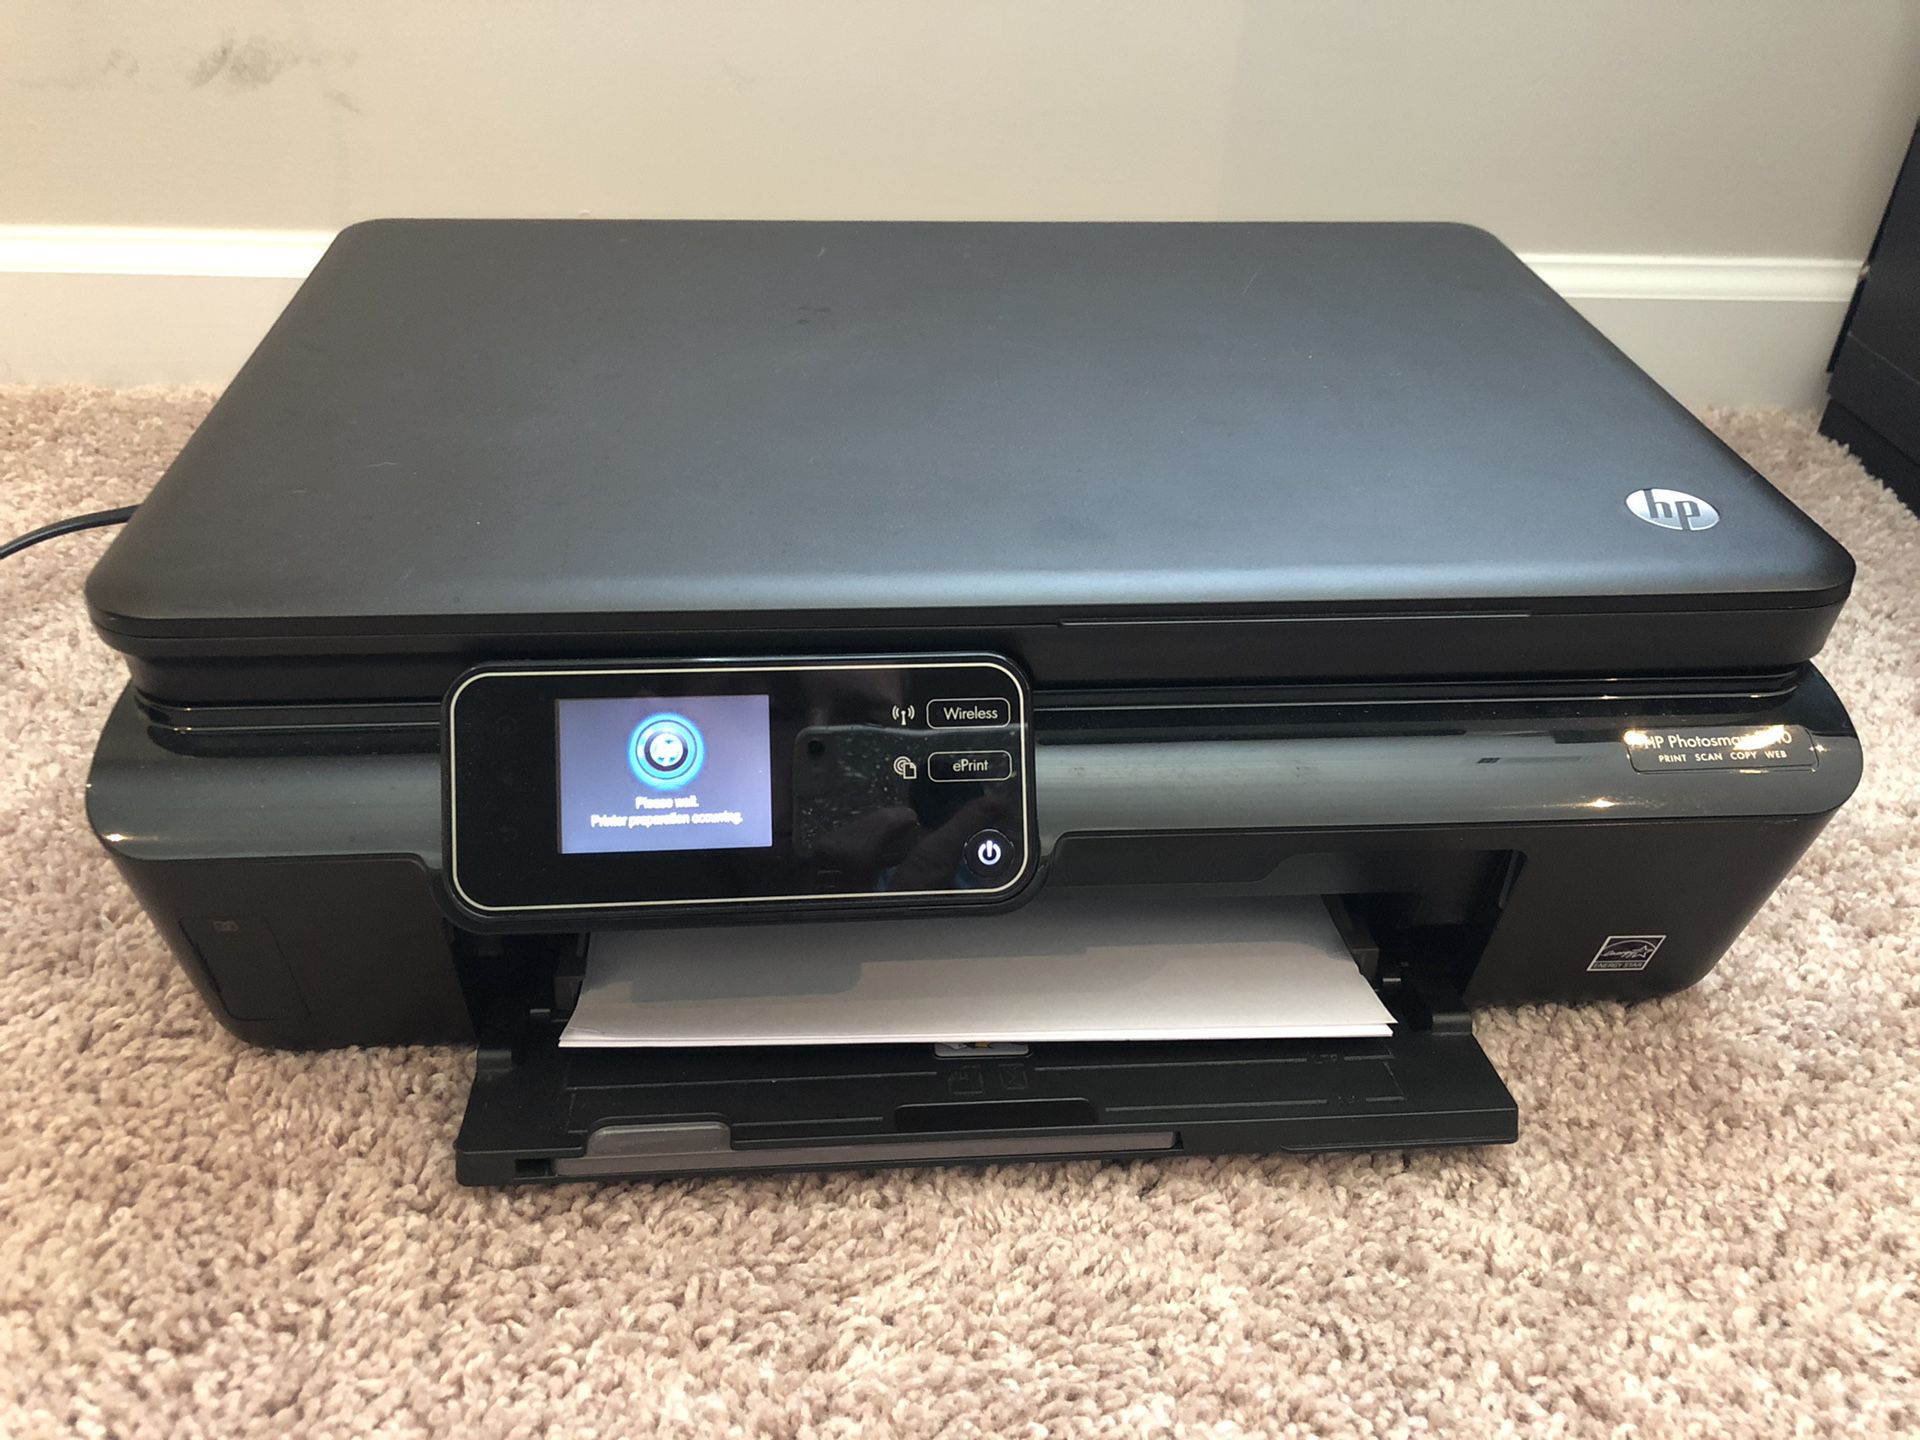 HP Photosmart 5510 printer scanner